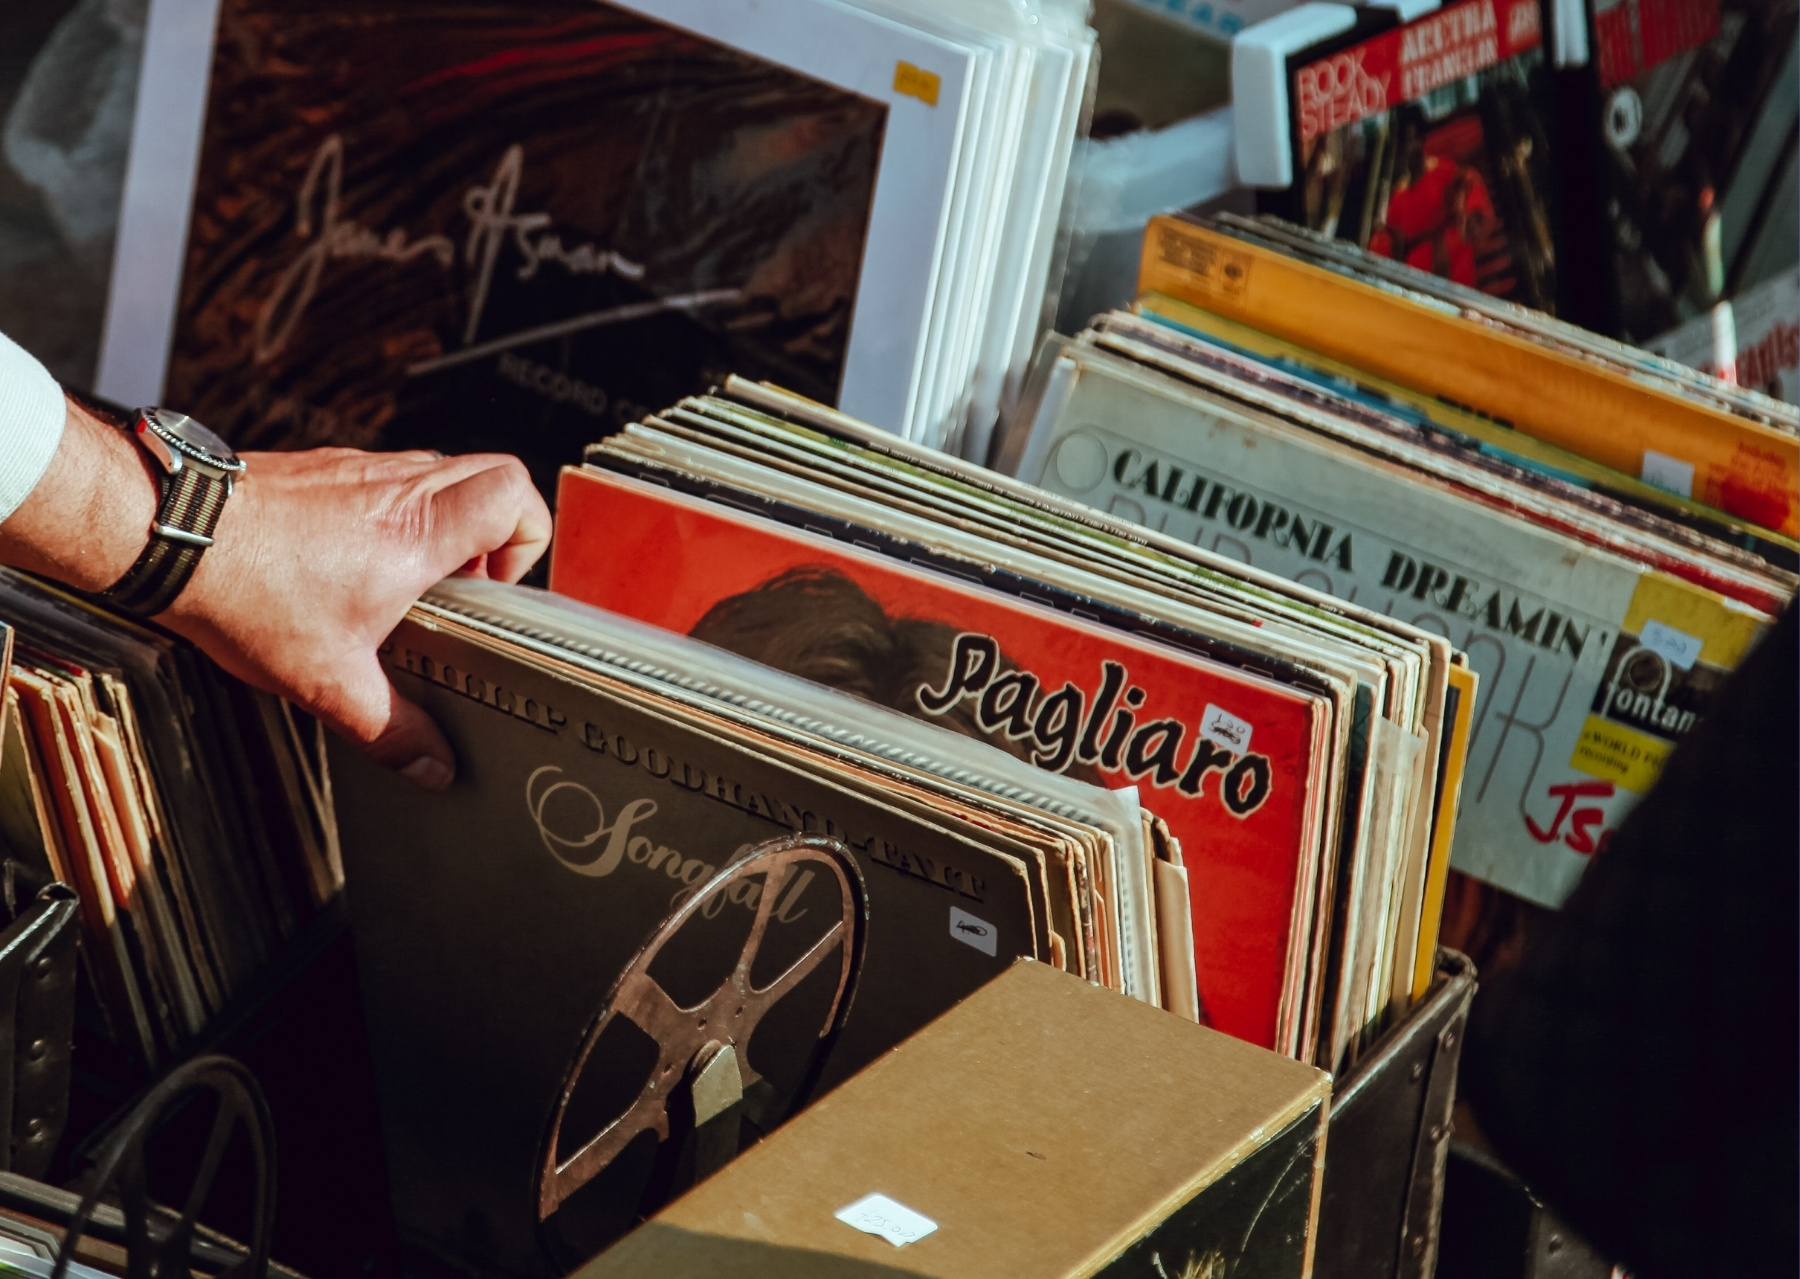 Hand looking through vinyl music records